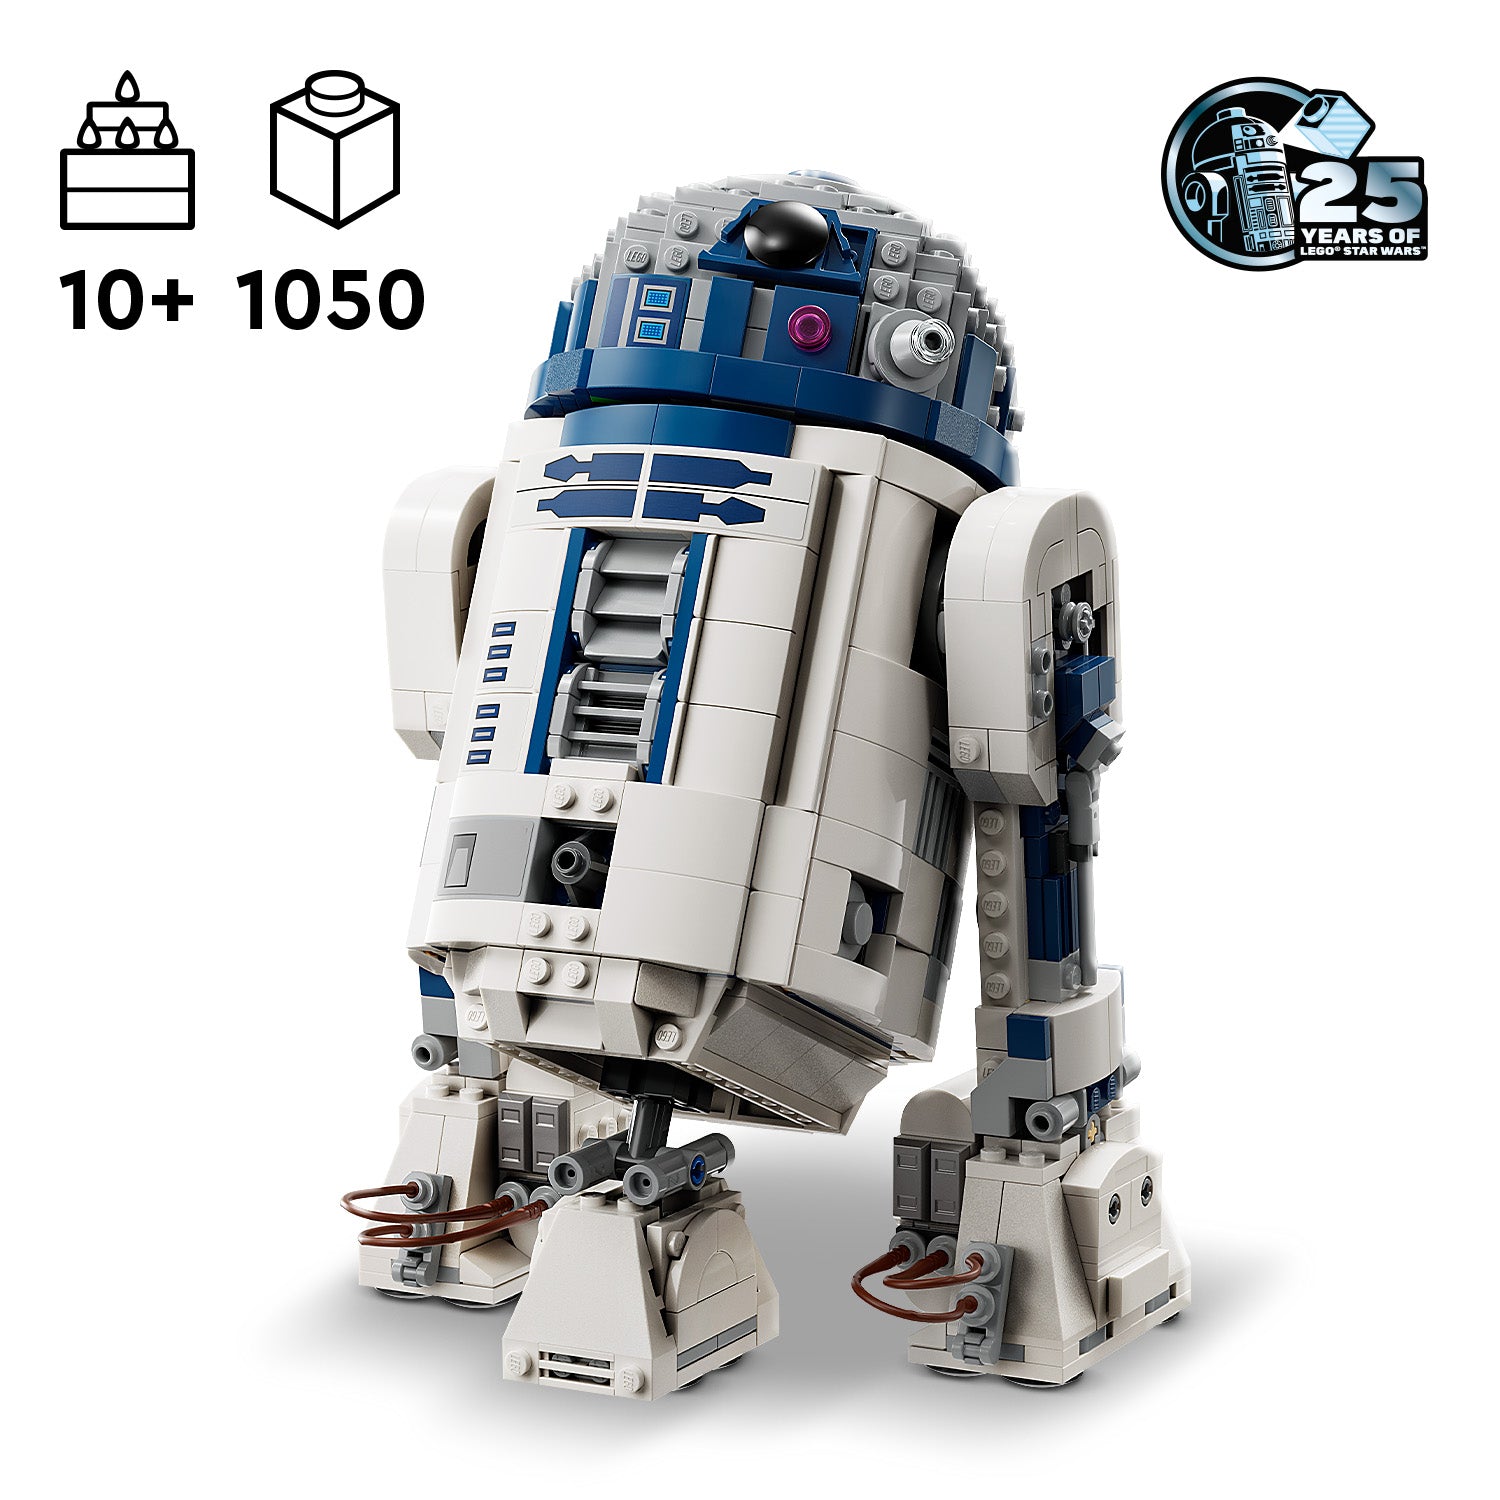 Lego 75379 R2-D2